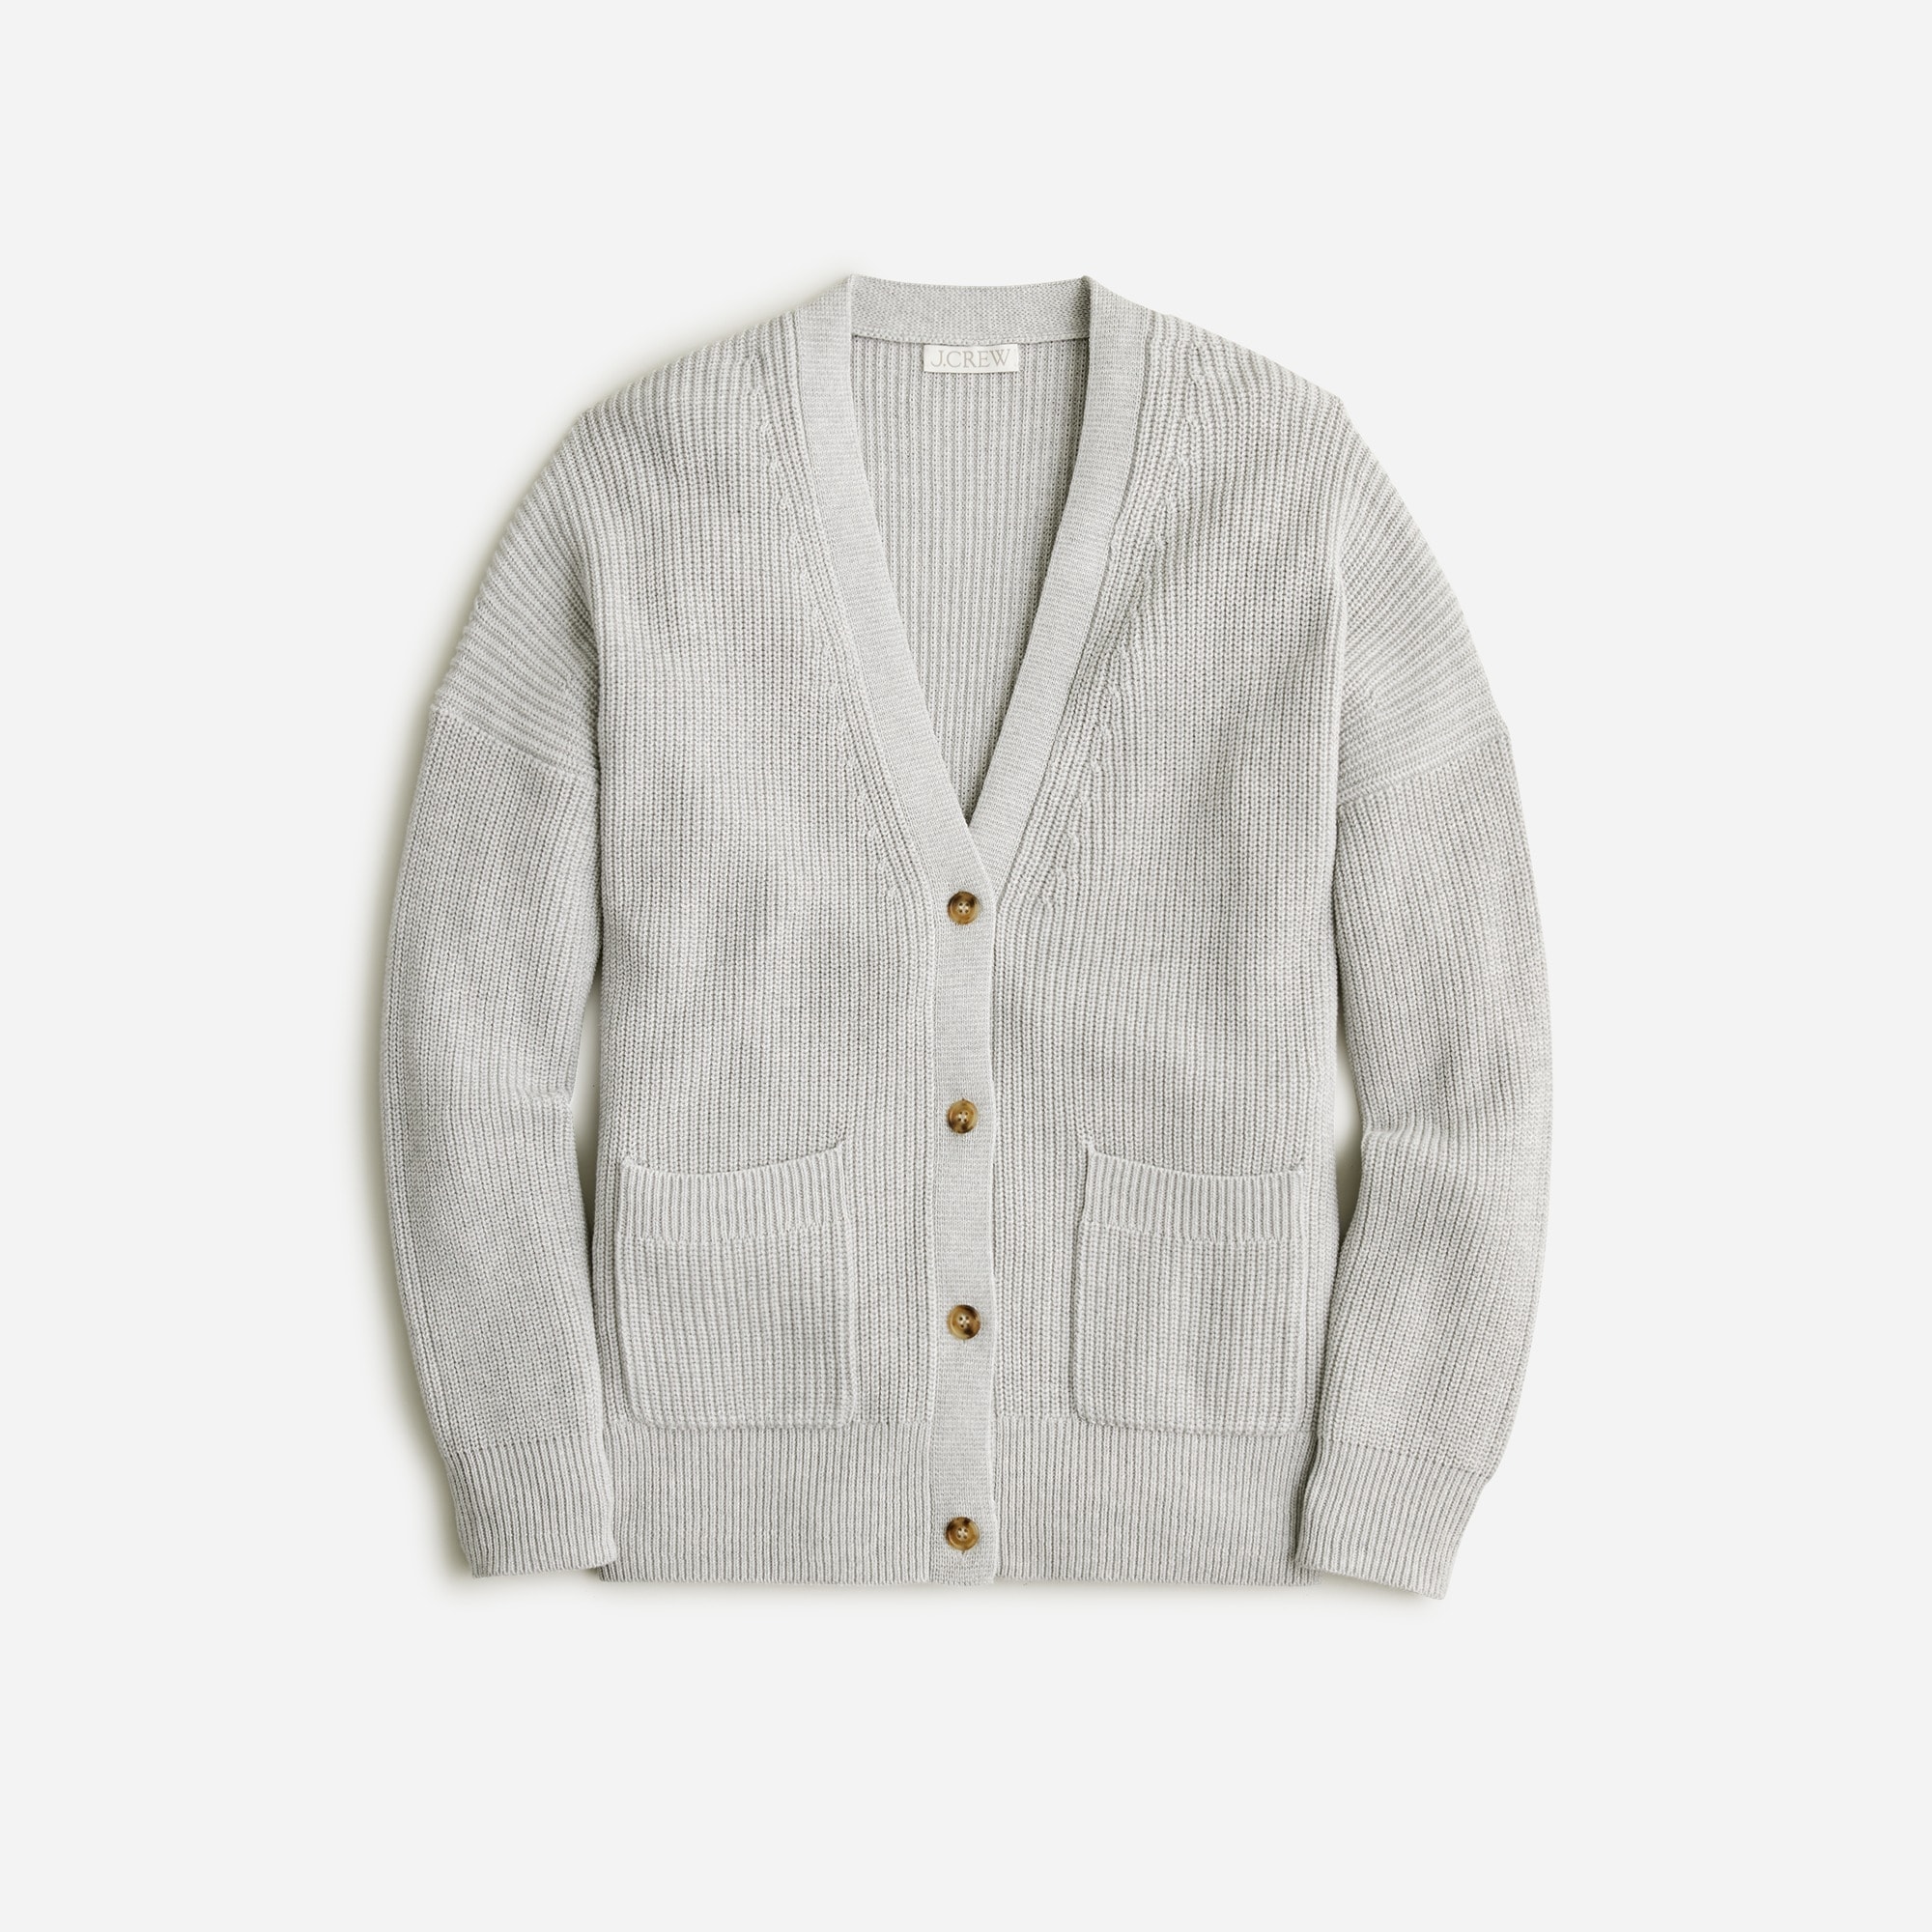  V-neck cotton-blend cardigan sweater